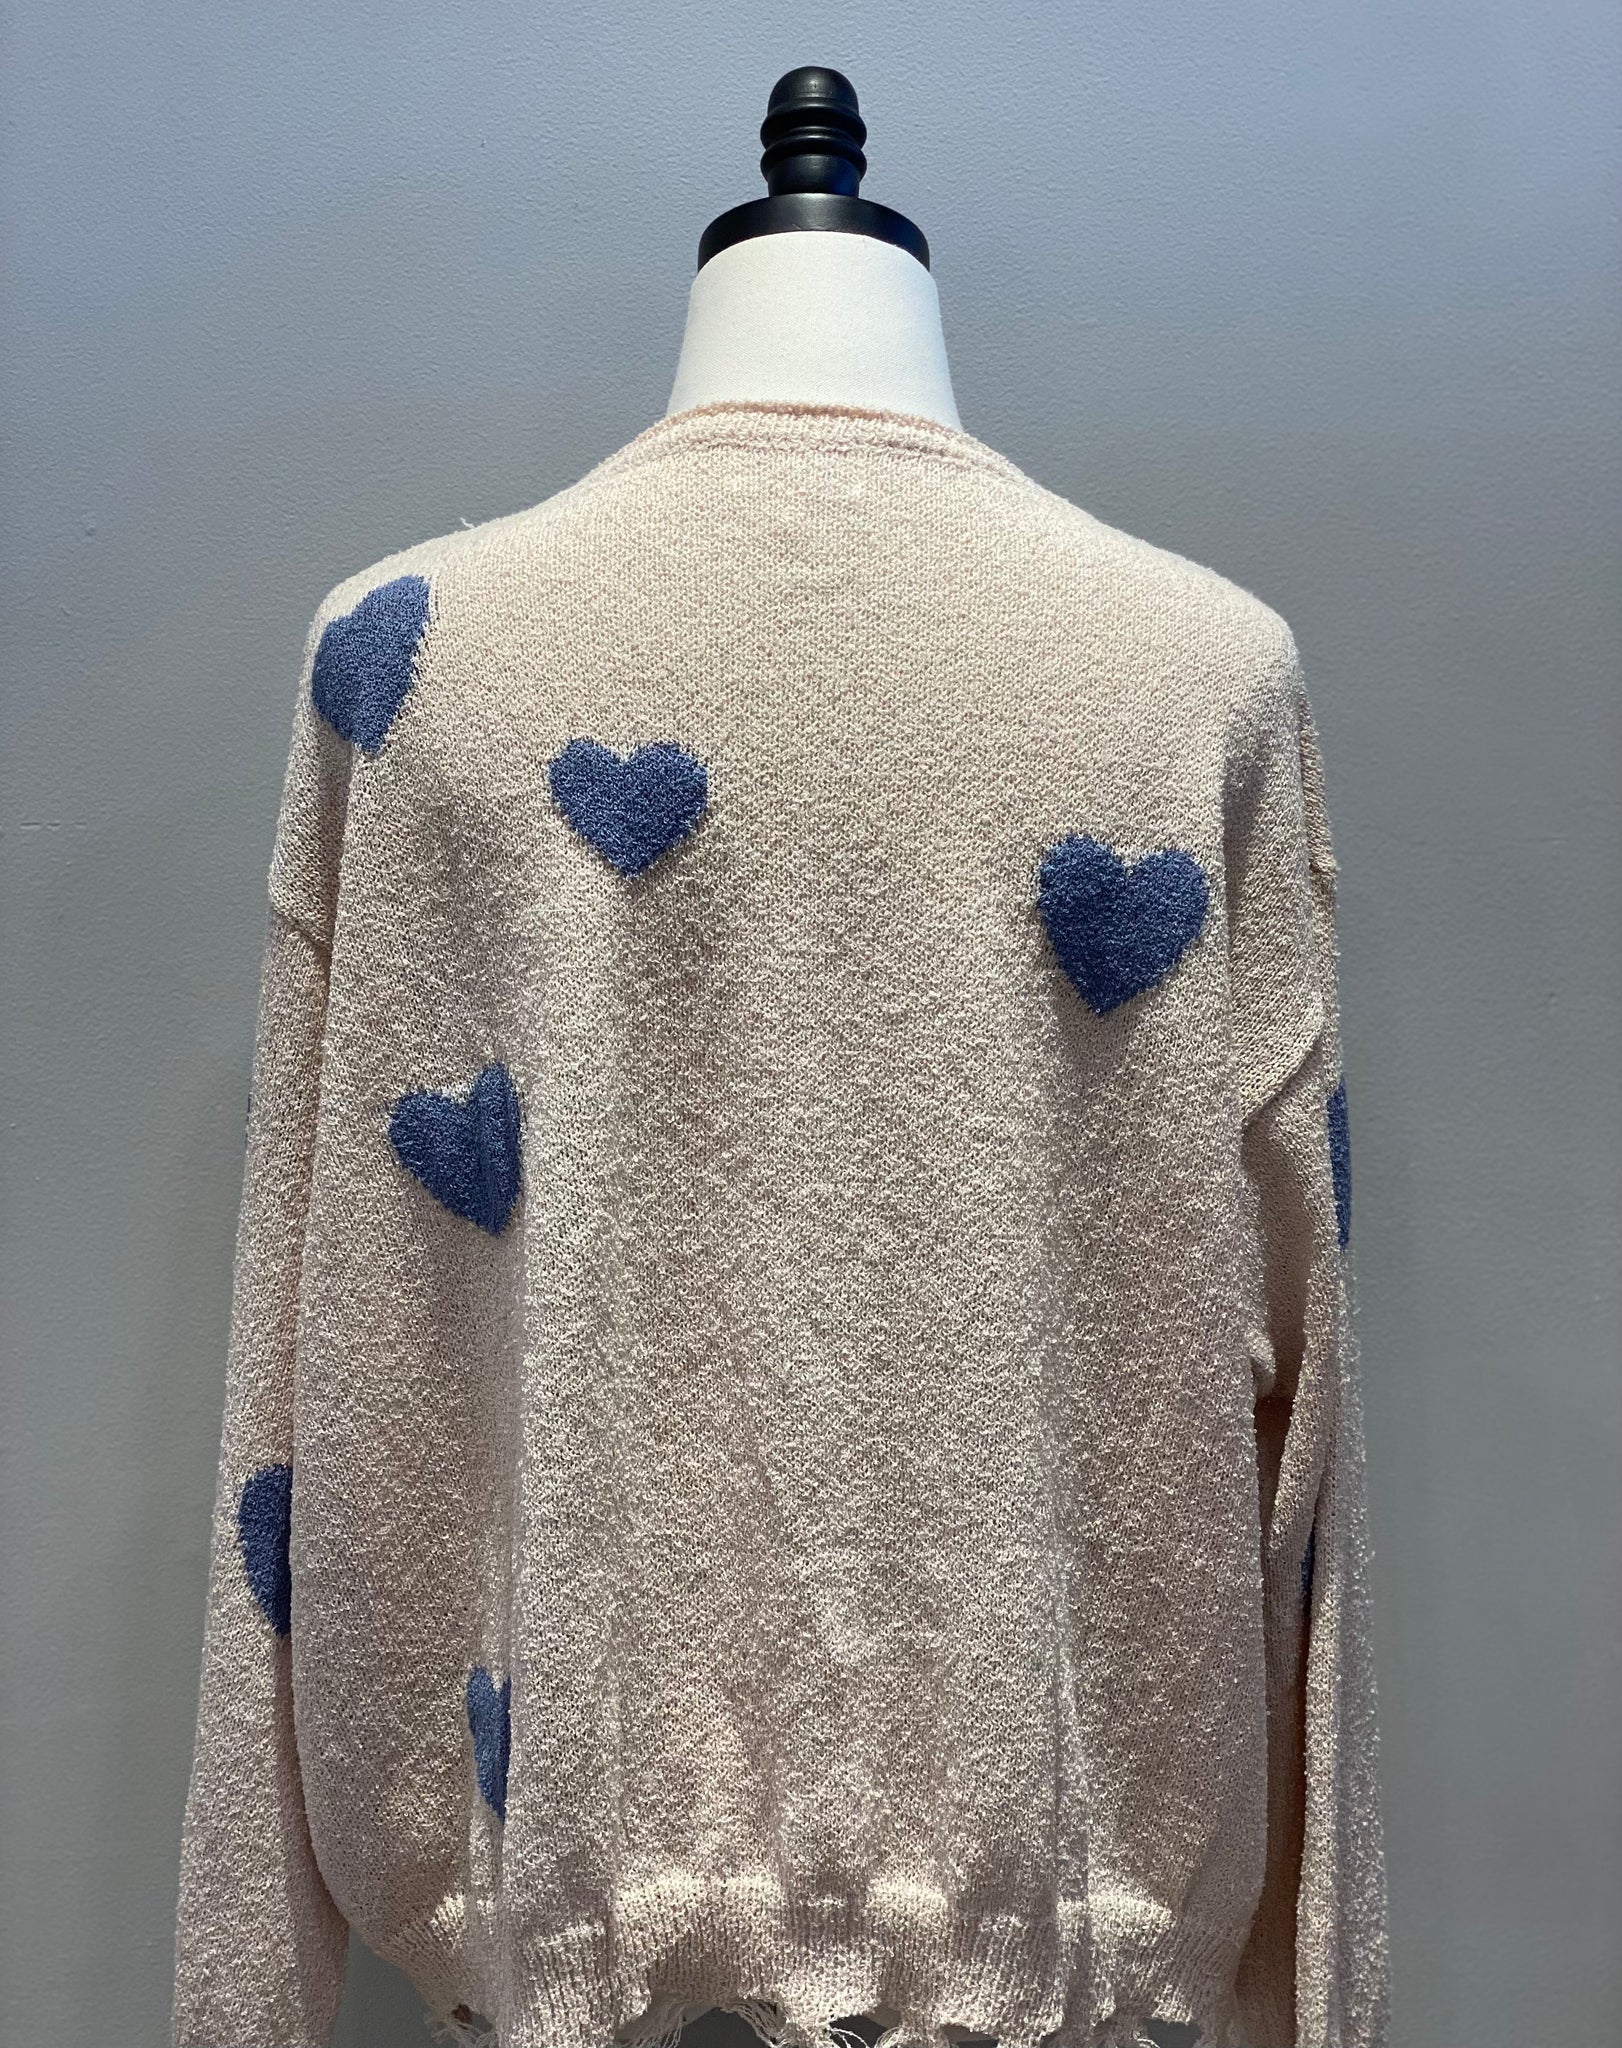 Boat Neck Heart Sweater